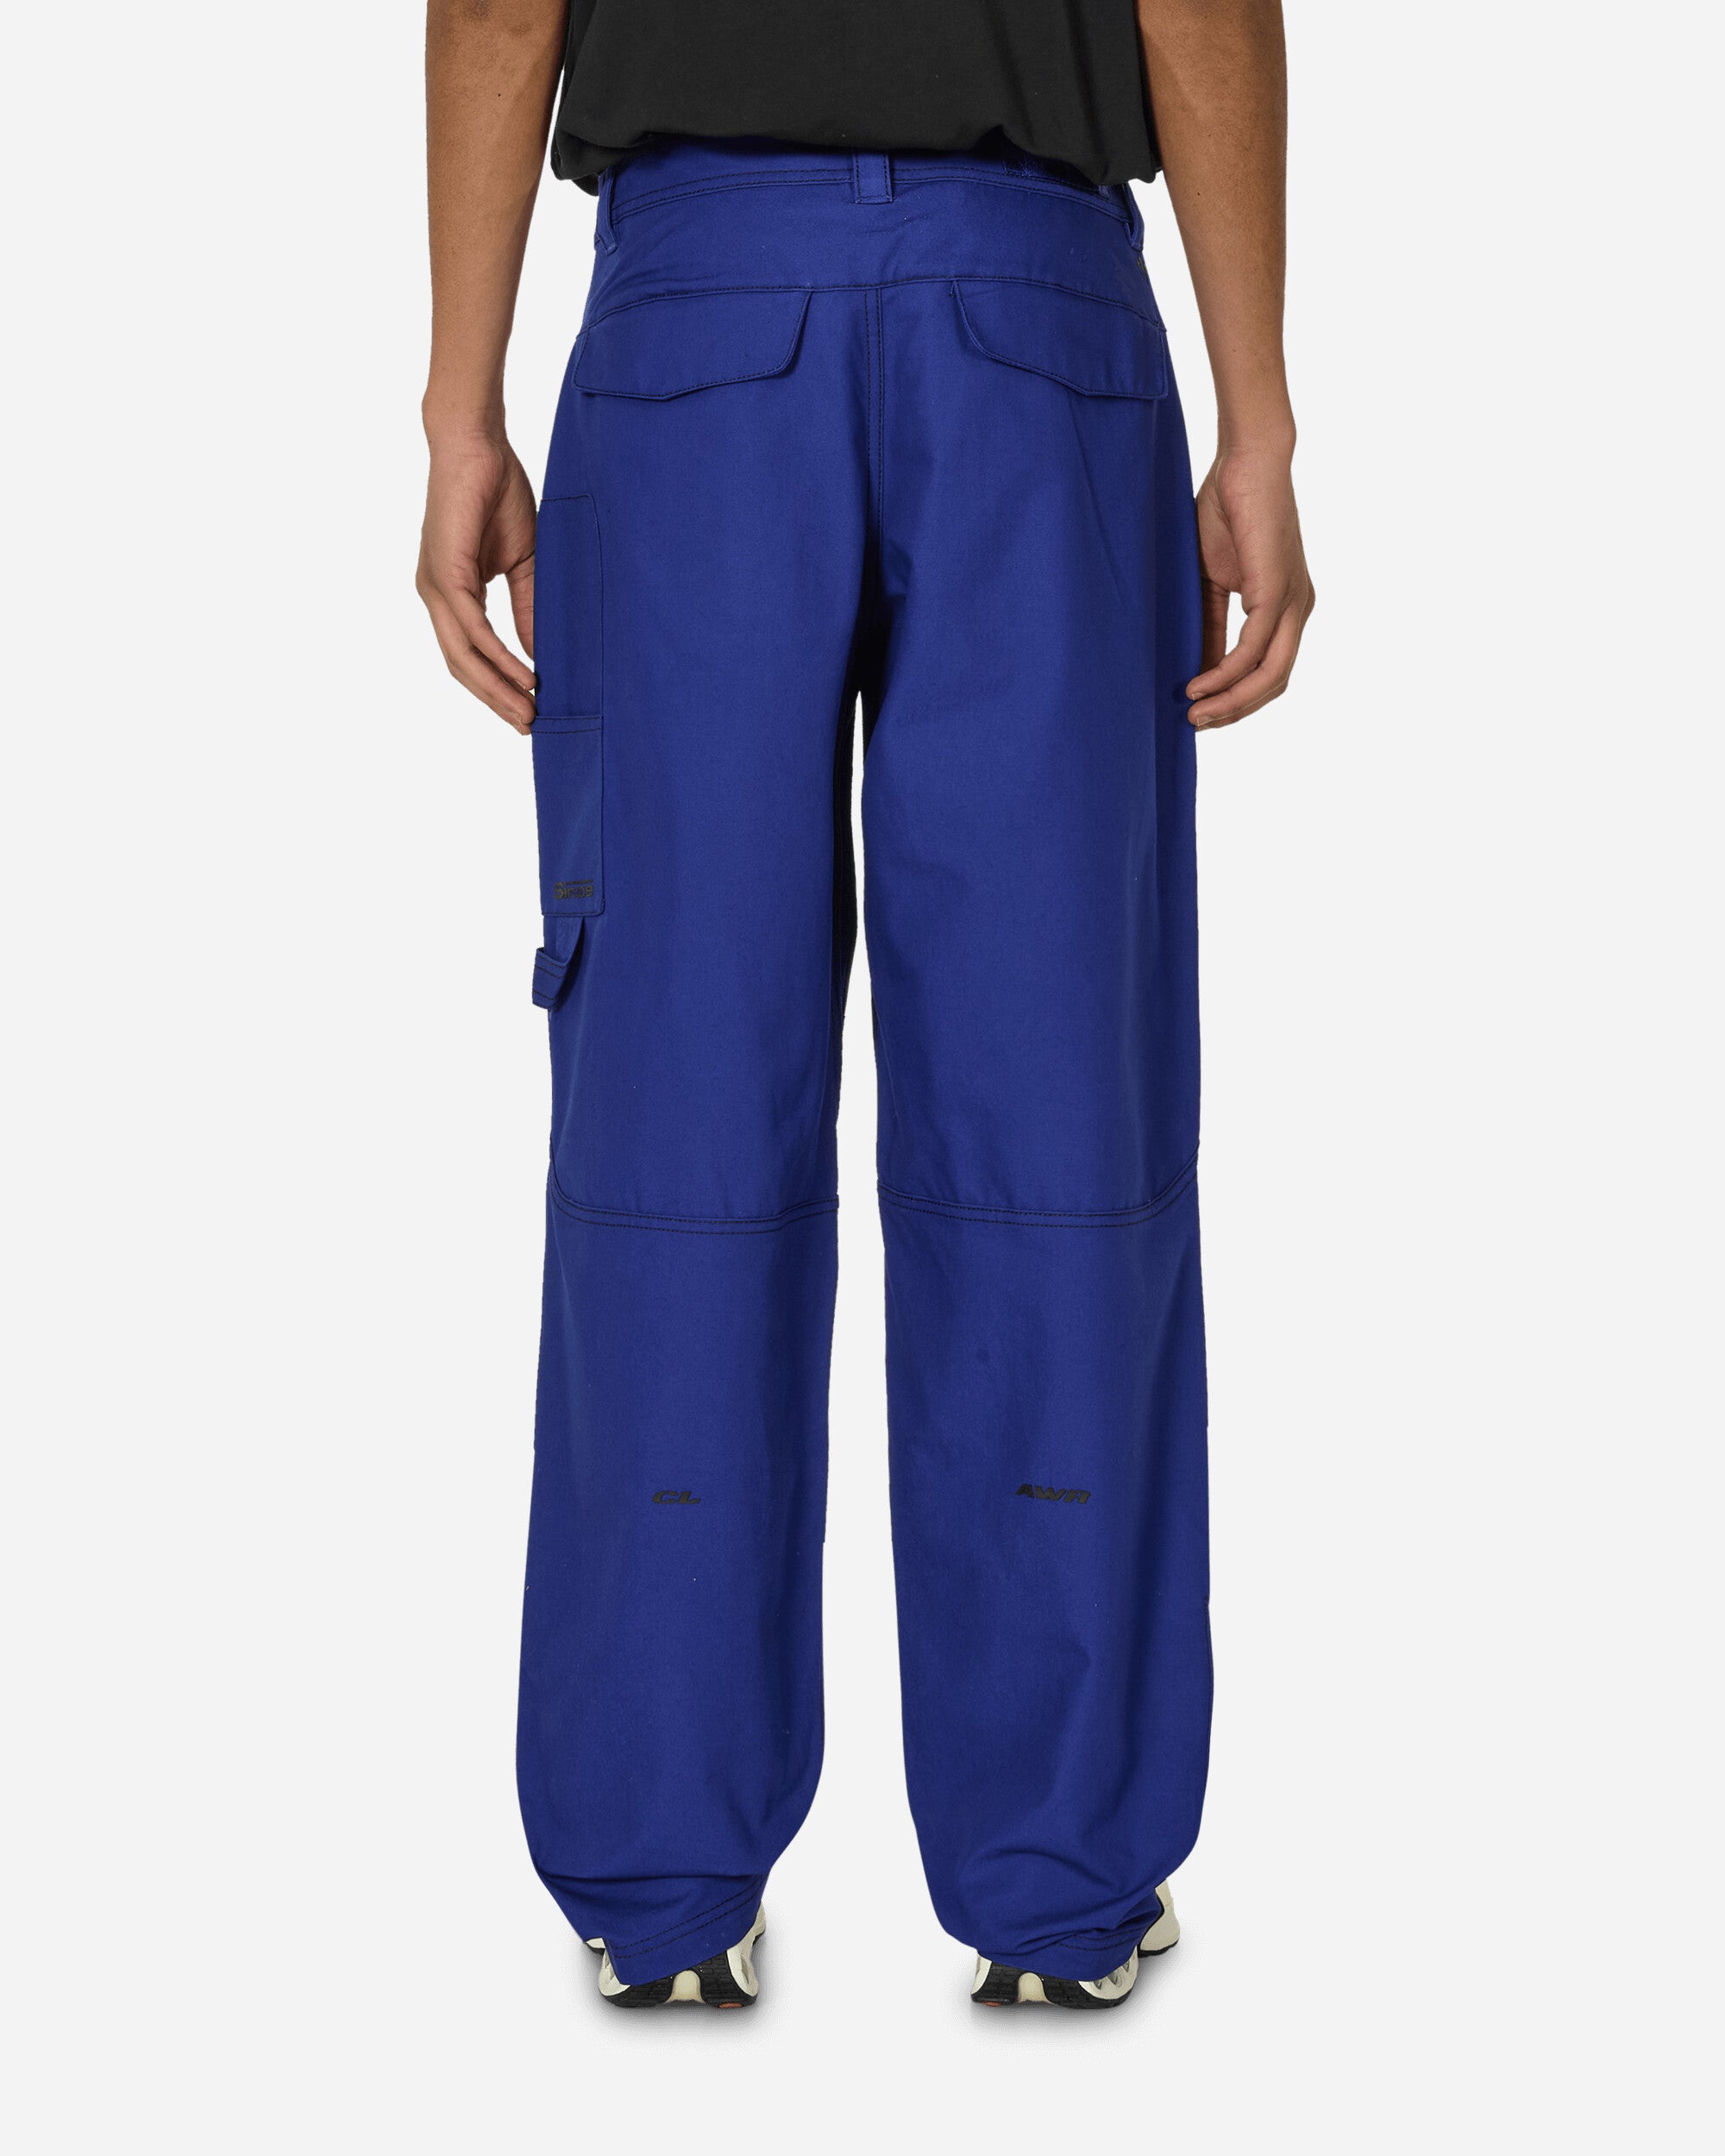 Nike M Nrg U Lart Pant Deep Royal Blue/Black Pants Sweatpants FD6510-455